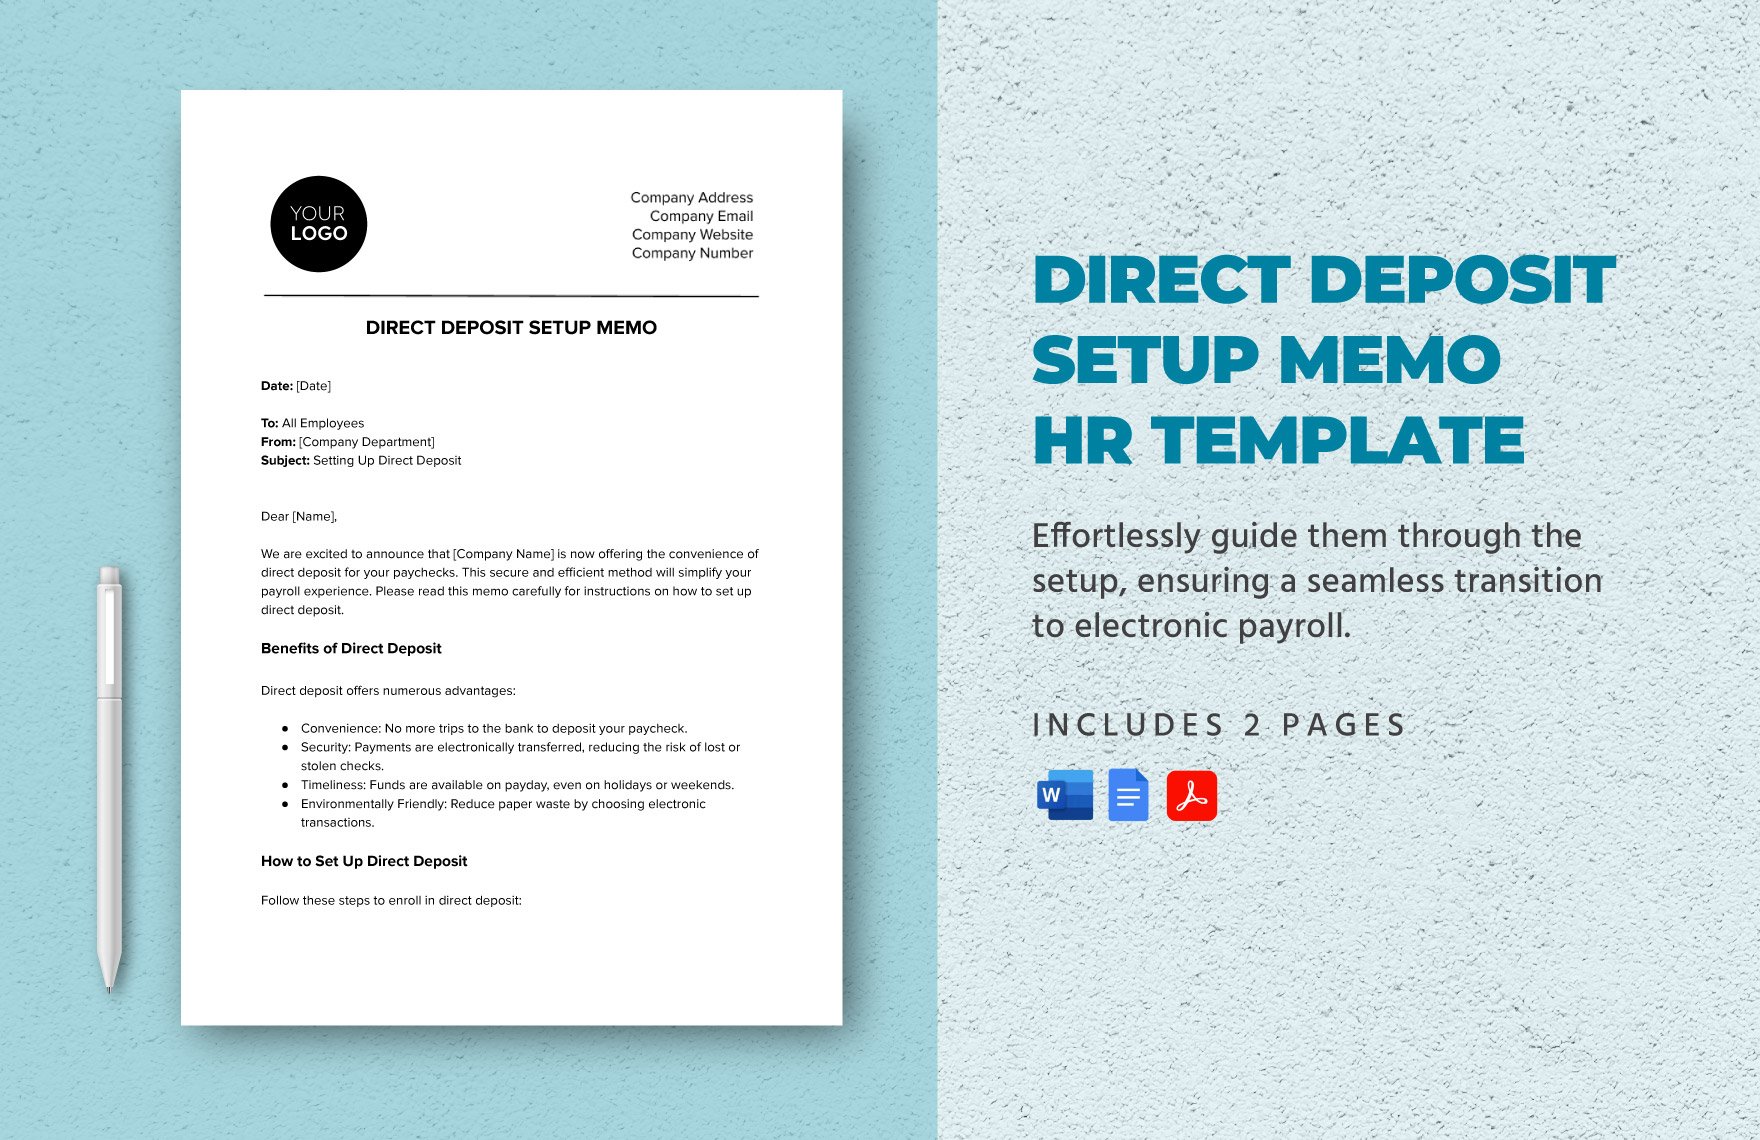 Direct Deposit Setup Memo HR Template in Word, Google Docs, PDF